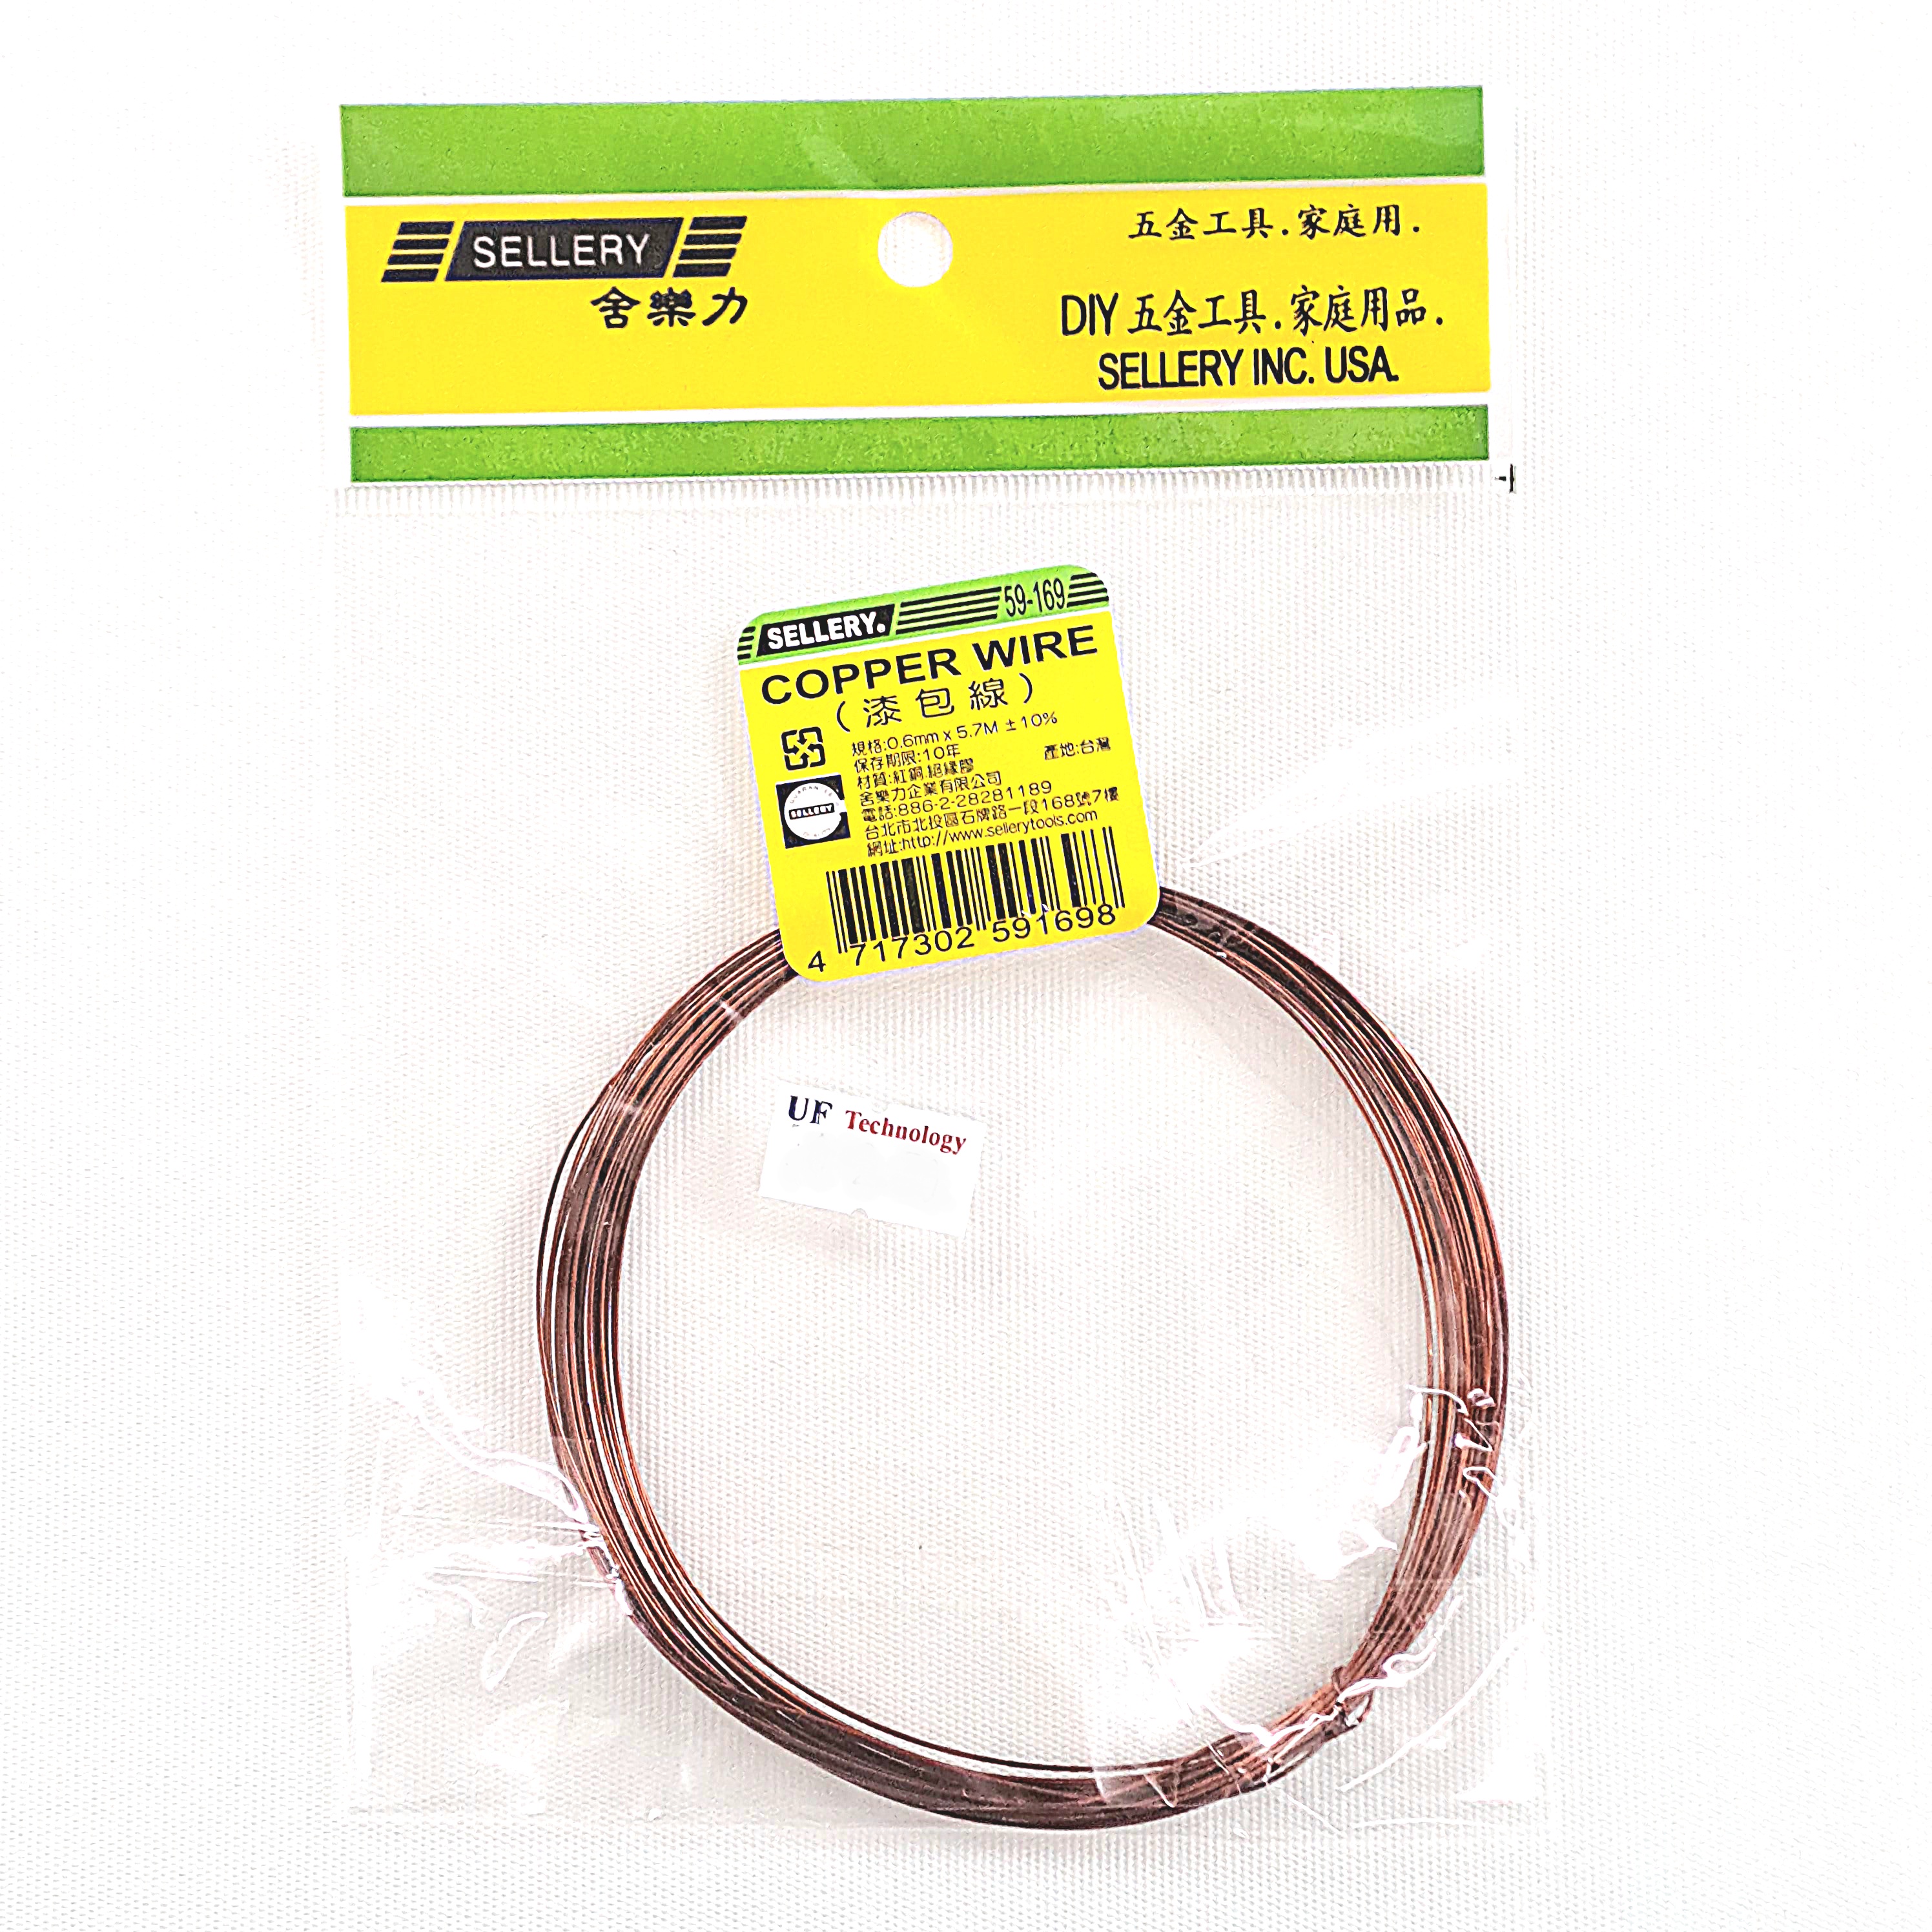 Sellery 59-169 Copper Wire w/Insulation Coat Size: 0.6mm x 5.7M